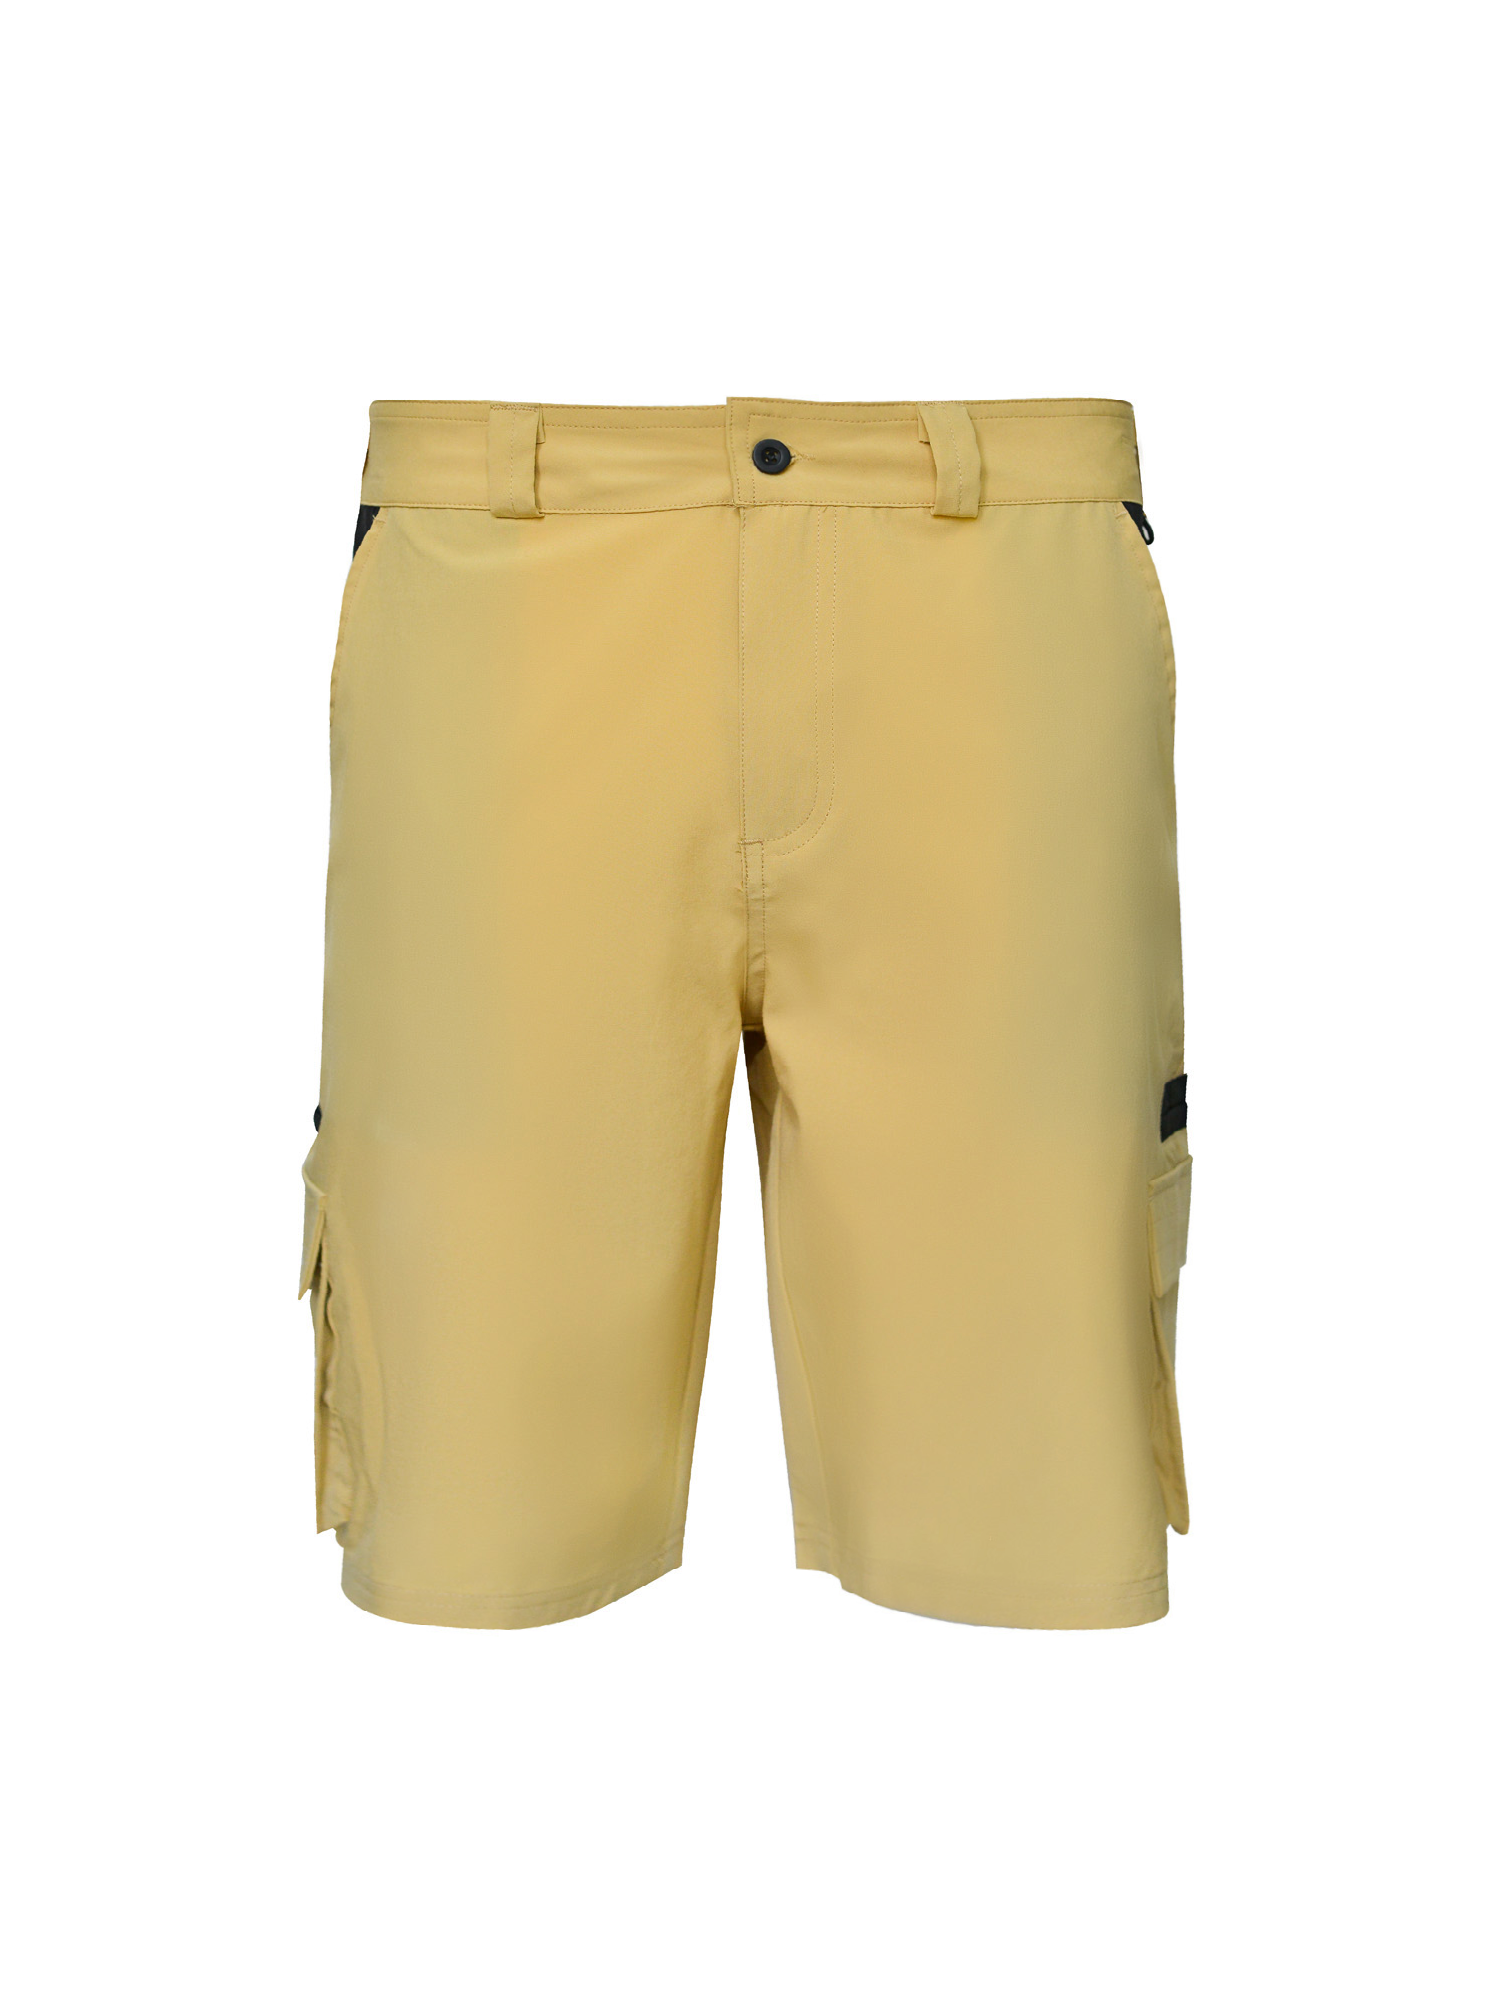 Bob Marlin Boat Shorts